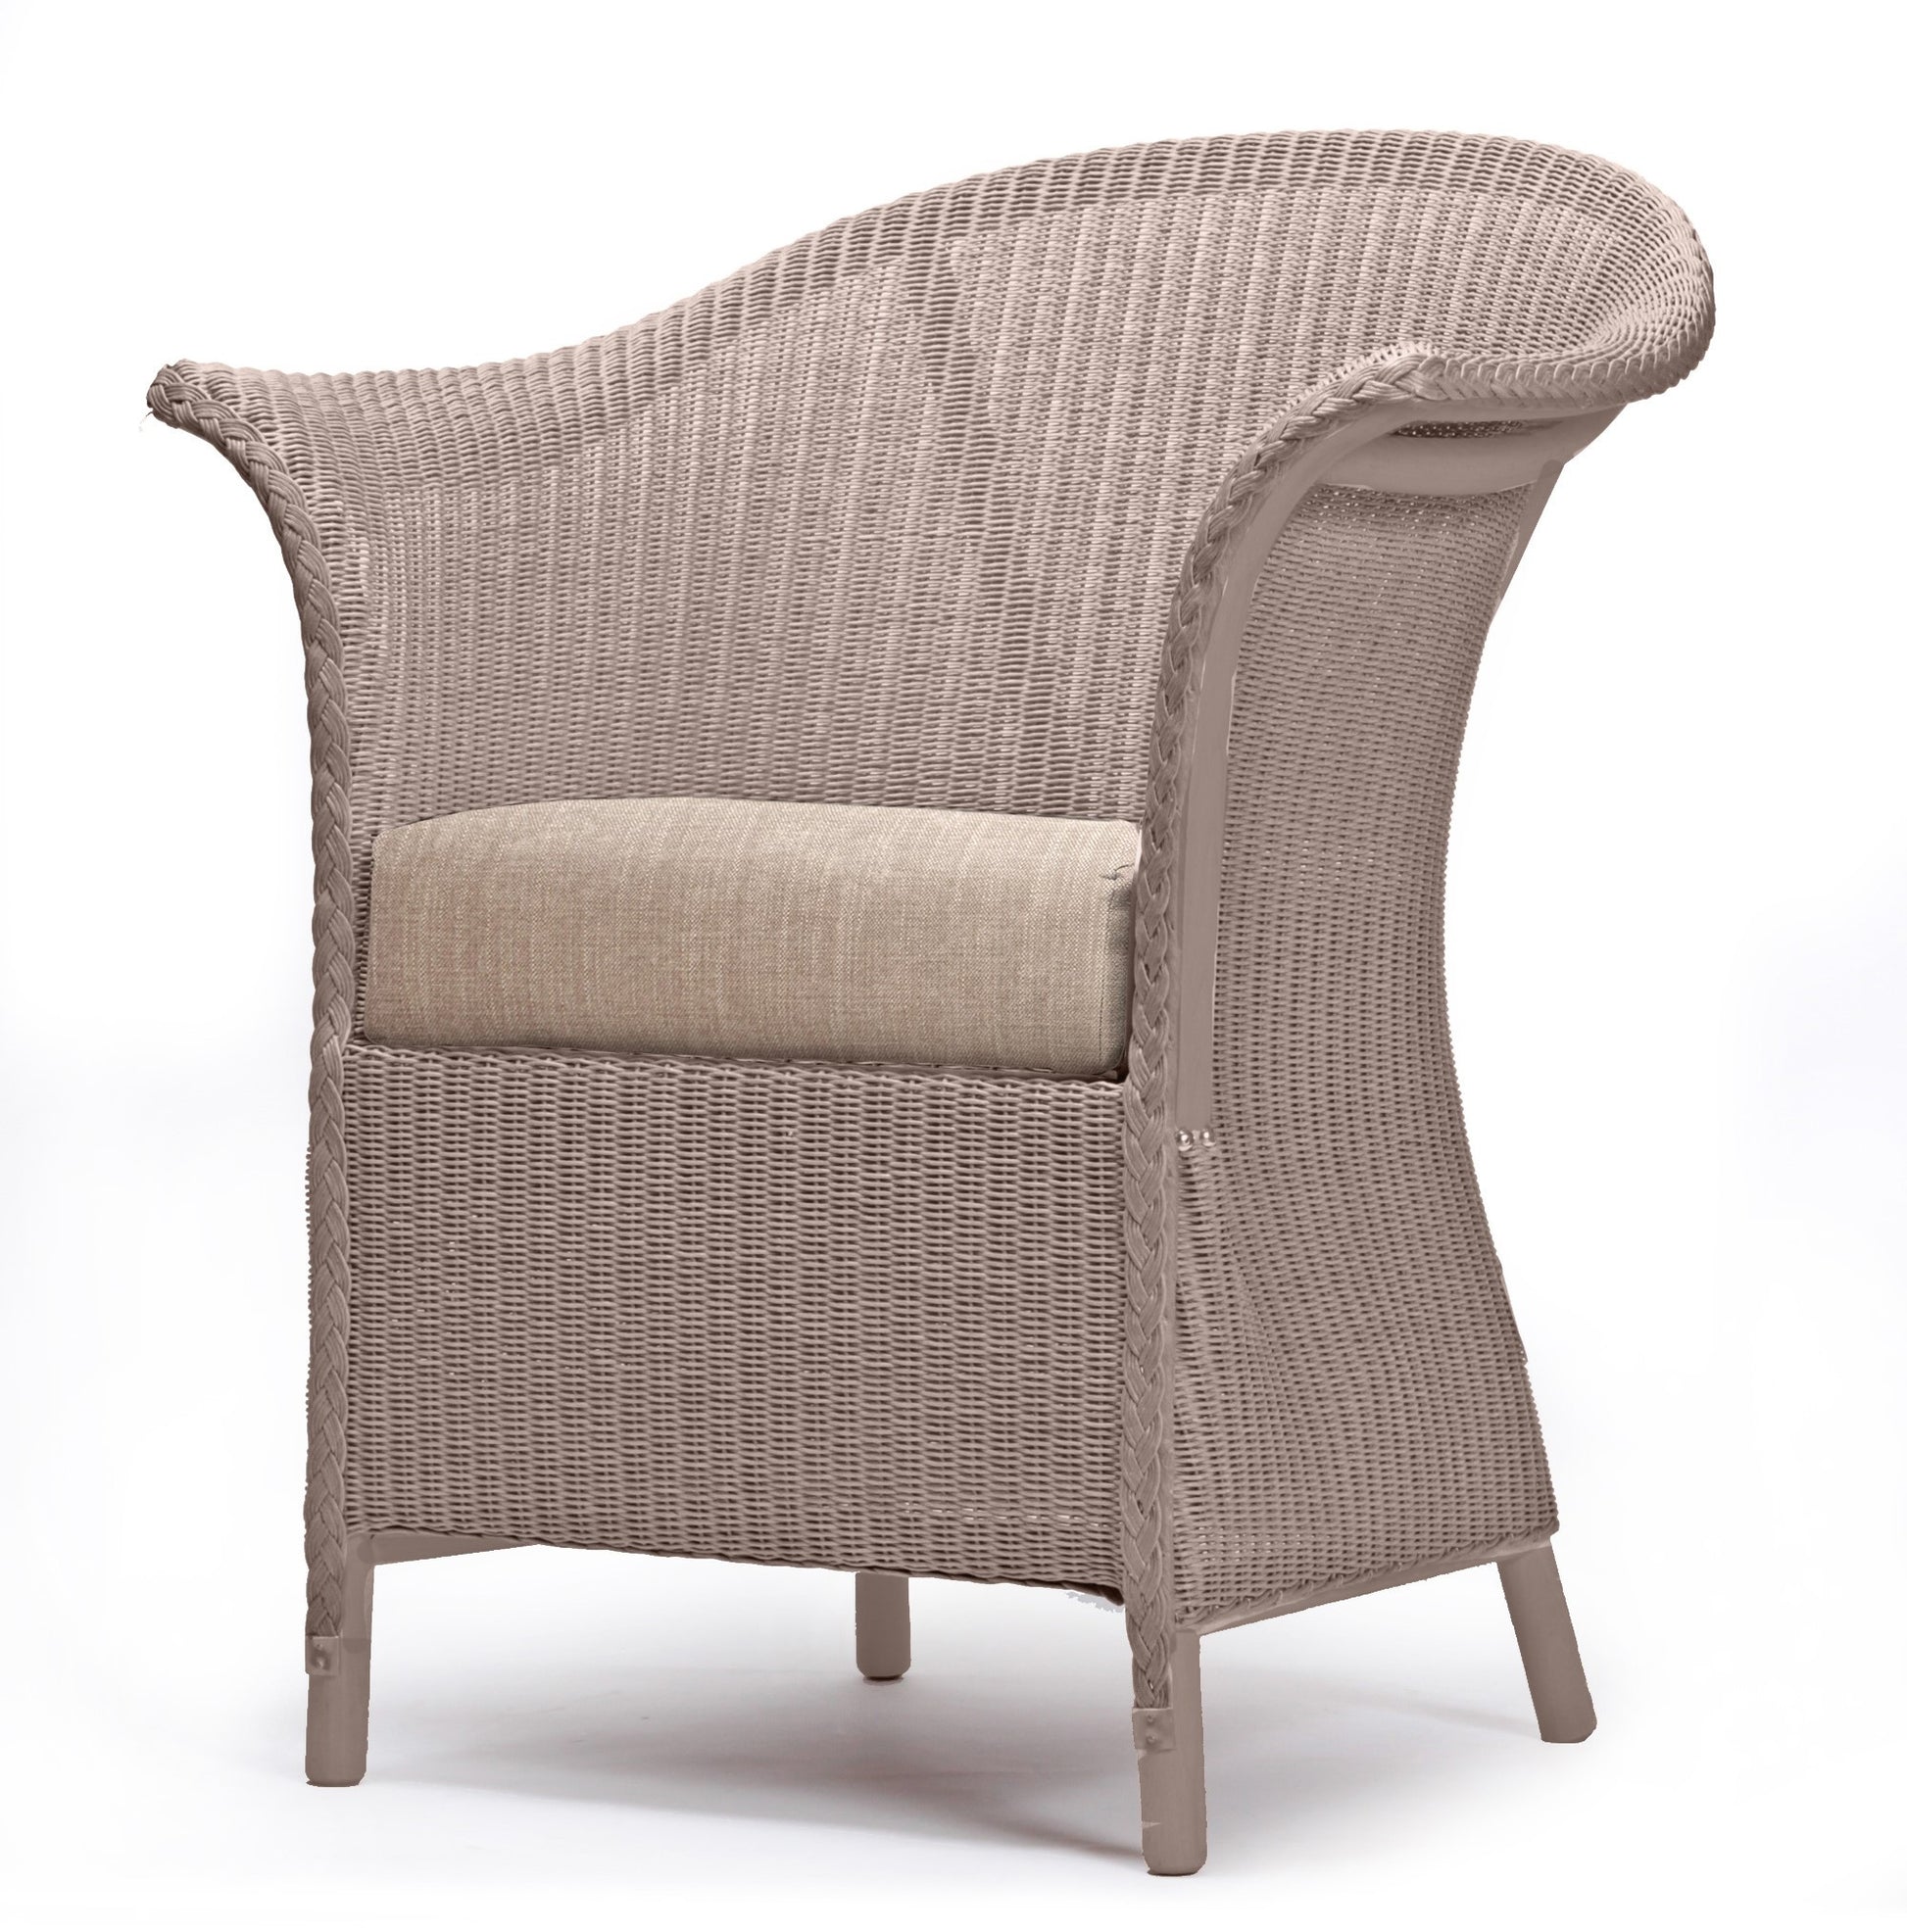 Fairbank Wide Lloyd Loom Armchair With Fabric Cushion